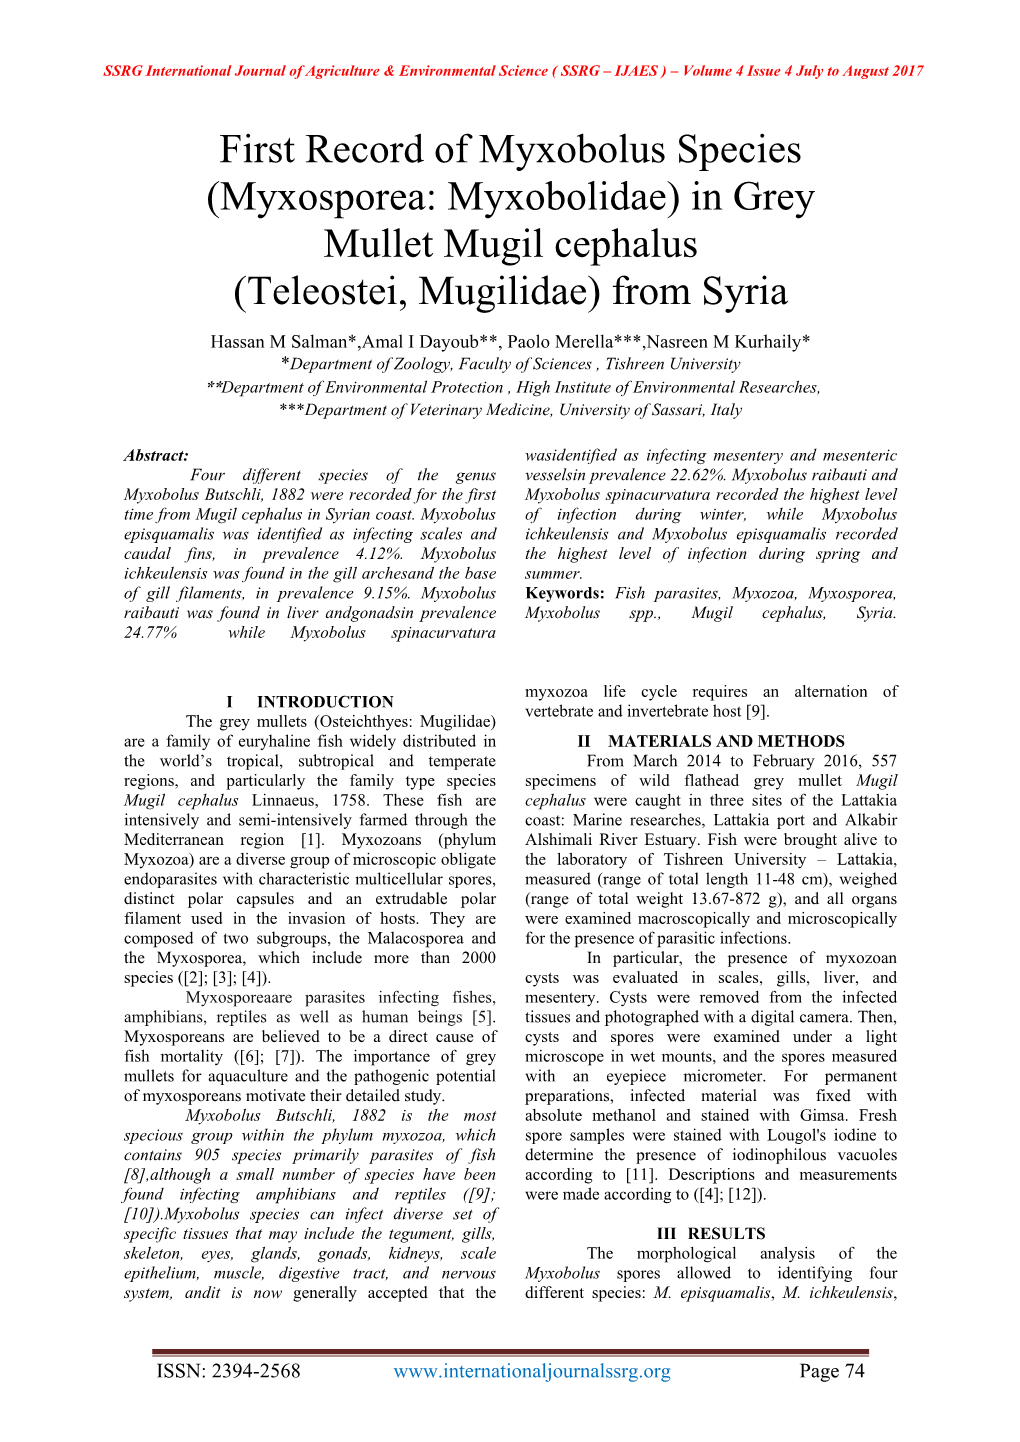 First Record of Myxobolus Species (Myxosporea: Myxobolidae) in Grey Mullet Mugil Cephalus (Teleostei, Mugilidae) from Syria